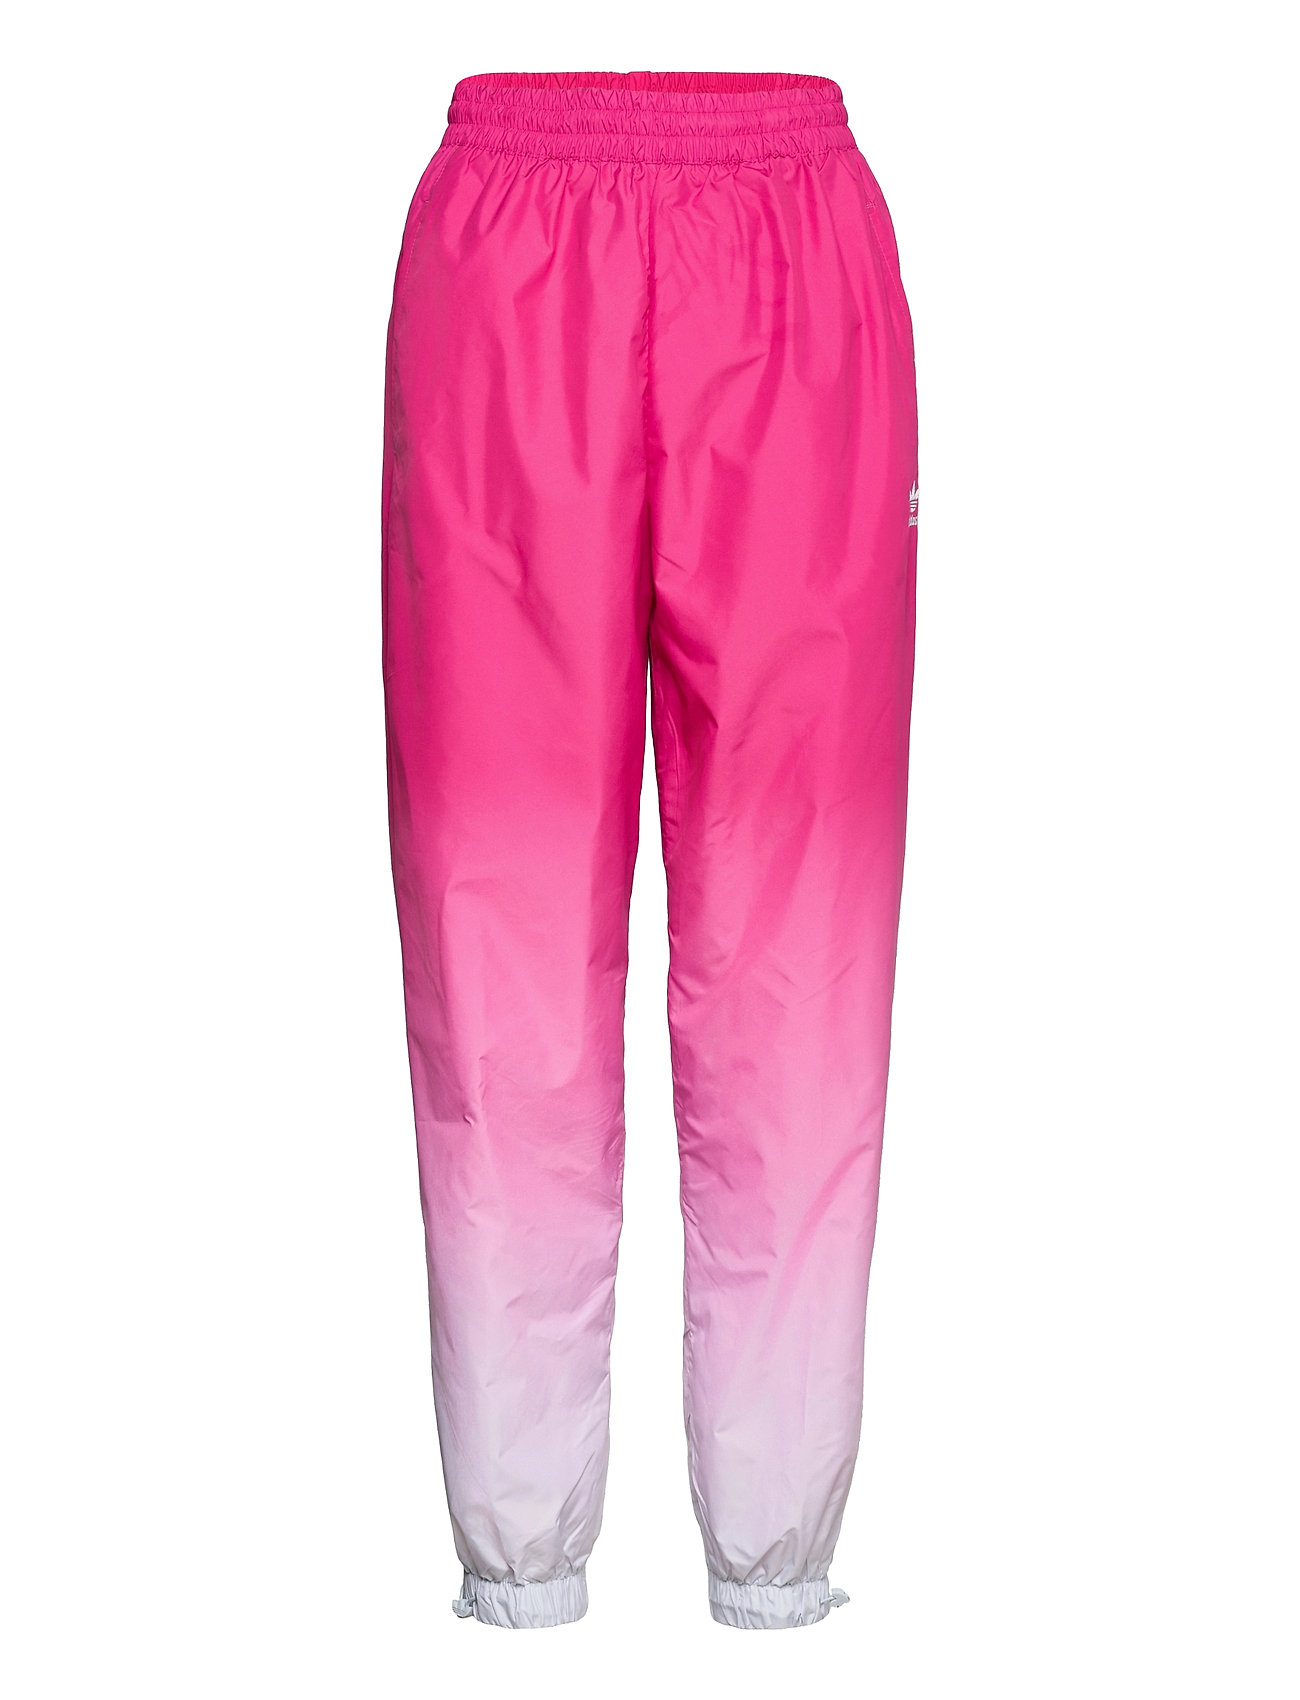 Adicolor Trefoil 3d Track Pants W Collegehousut Olohousut Vaaleanpunainen Adidas Originals, adidas Originals